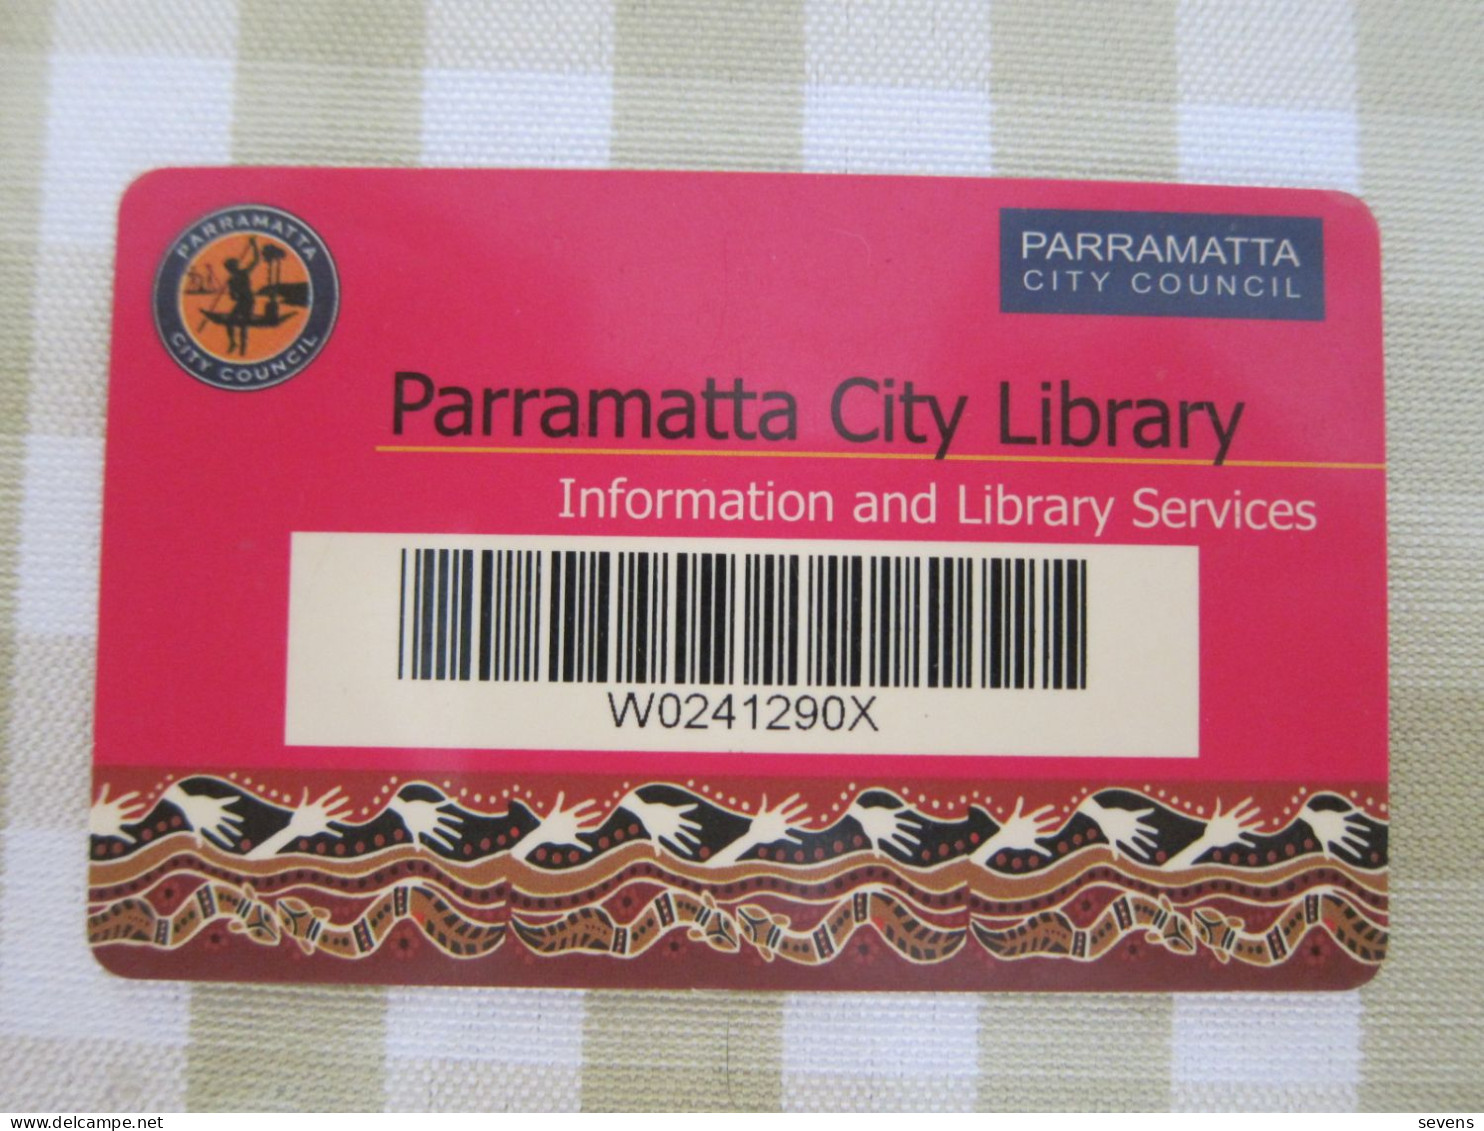 Parramatta(Sydney) City Library Card - Ohne Zuordnung